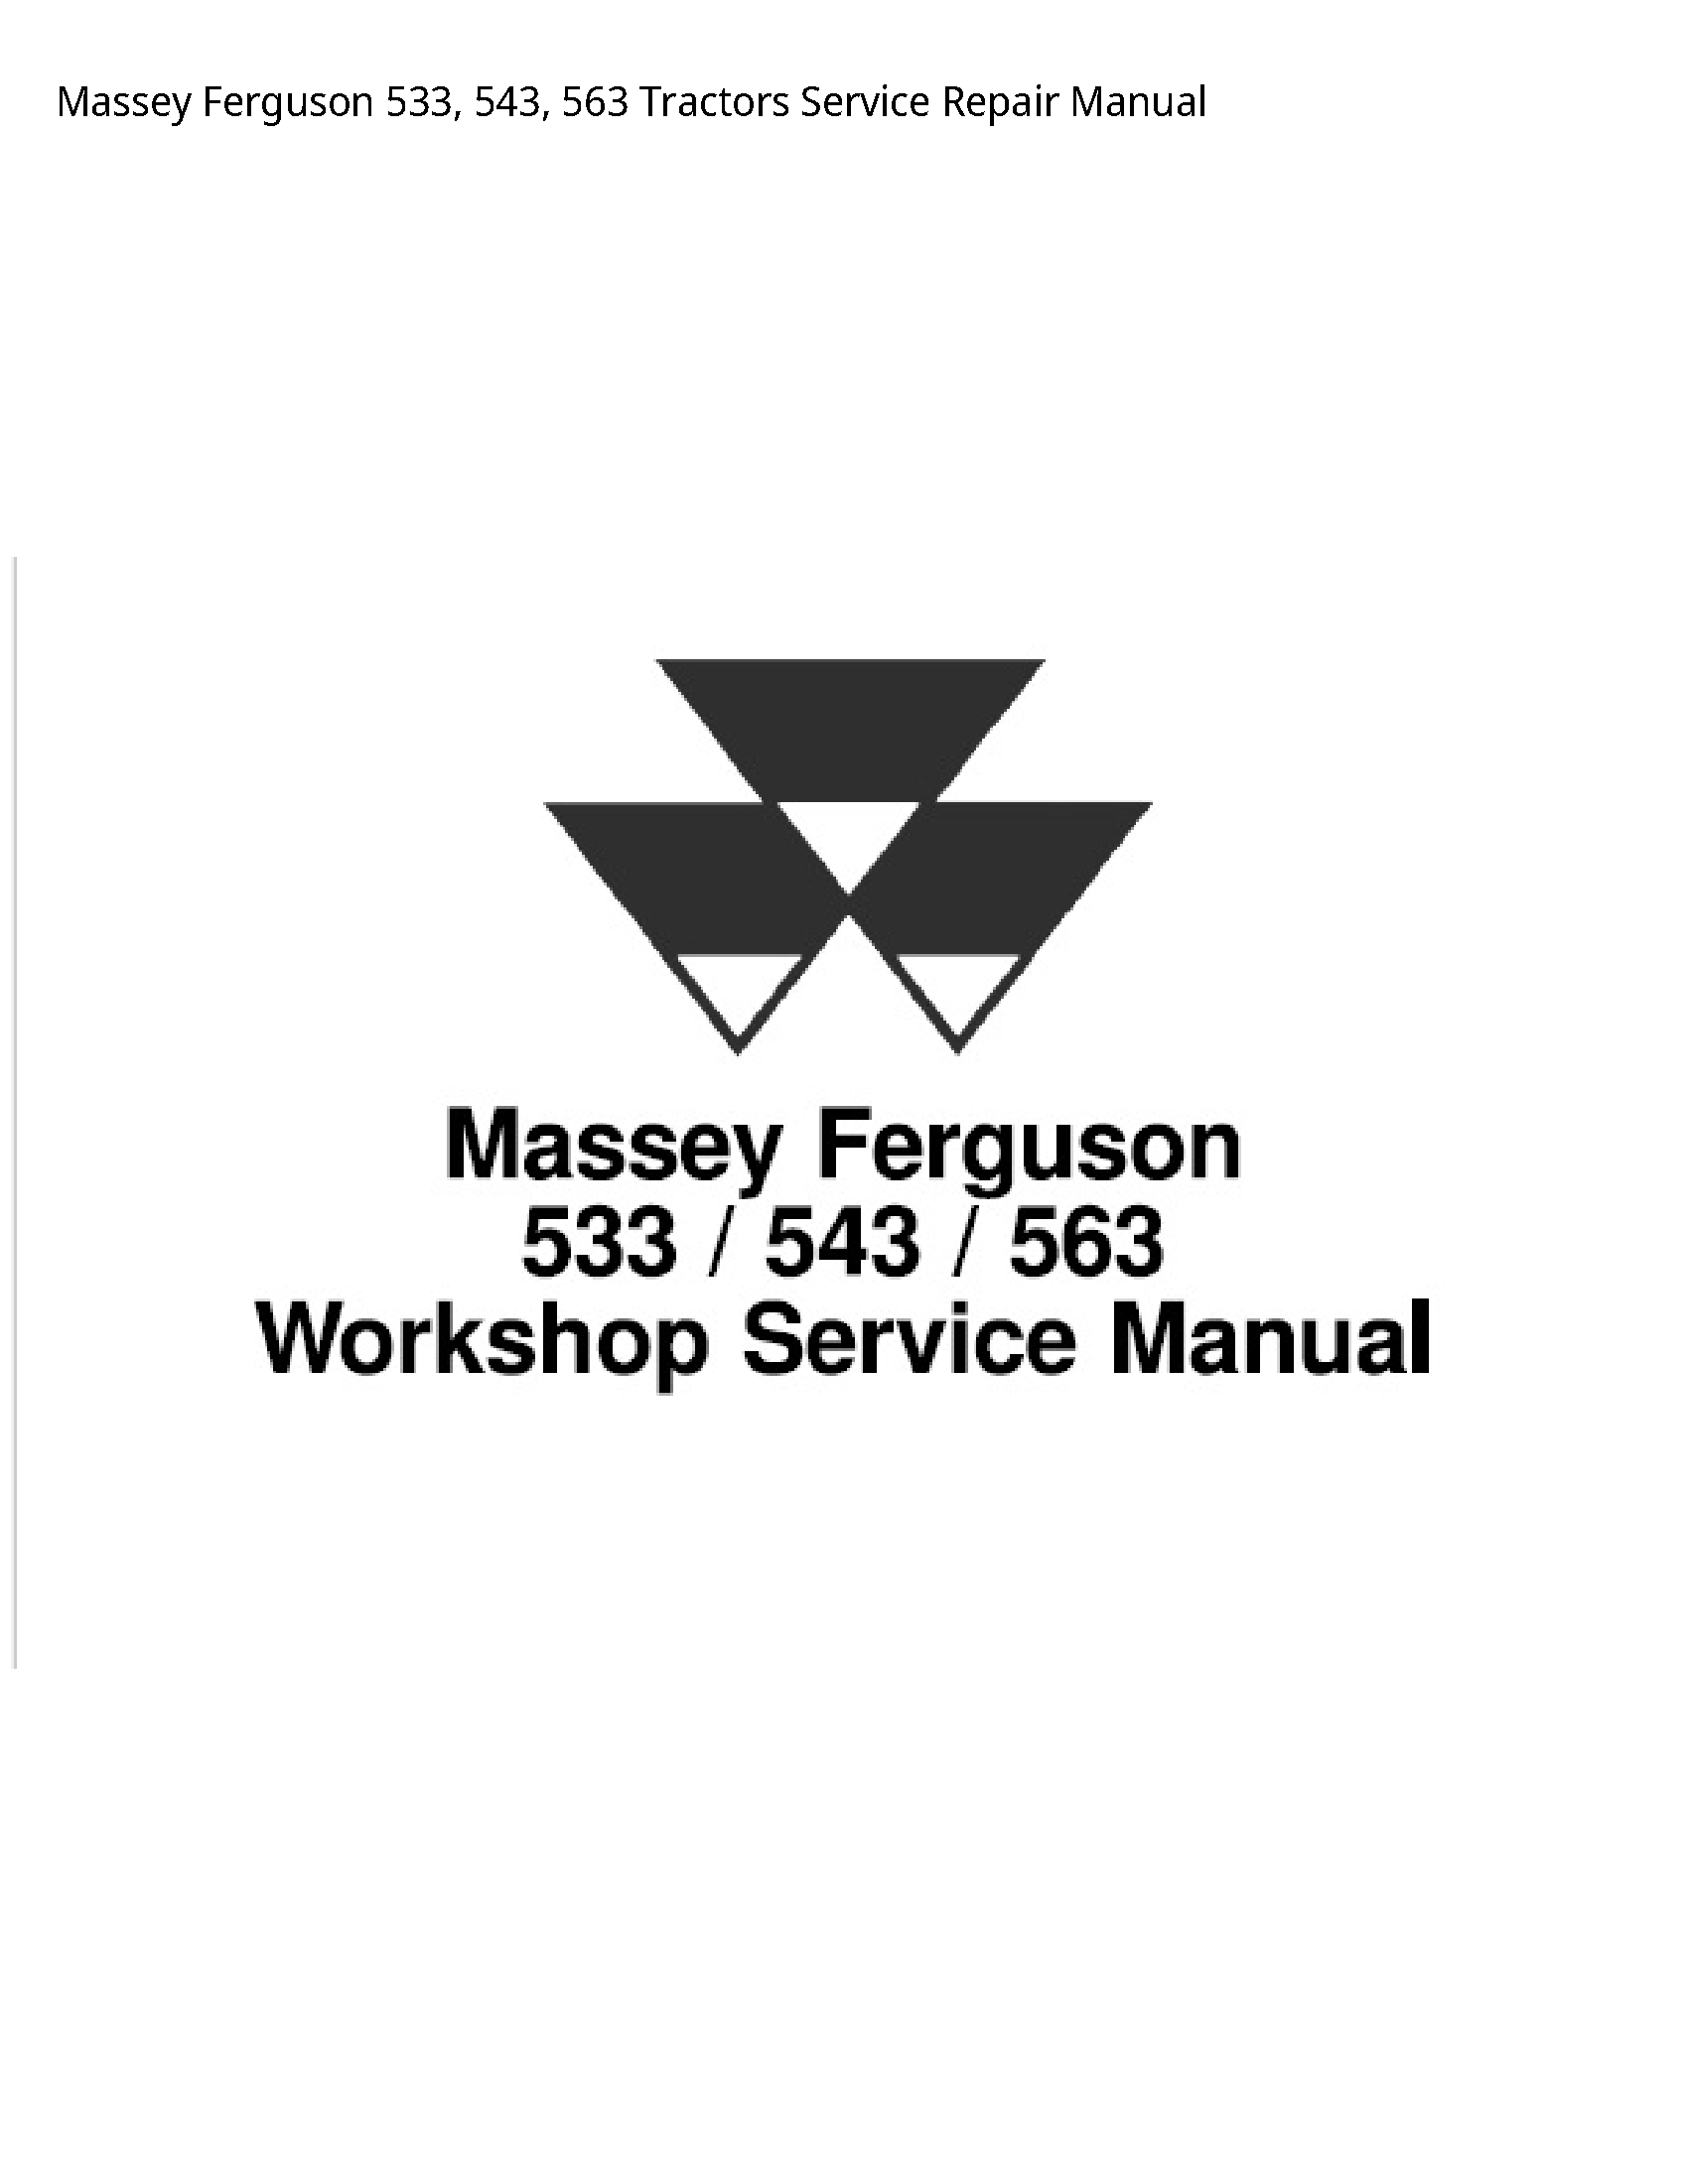 Massey Ferguson 533 Tractors manual